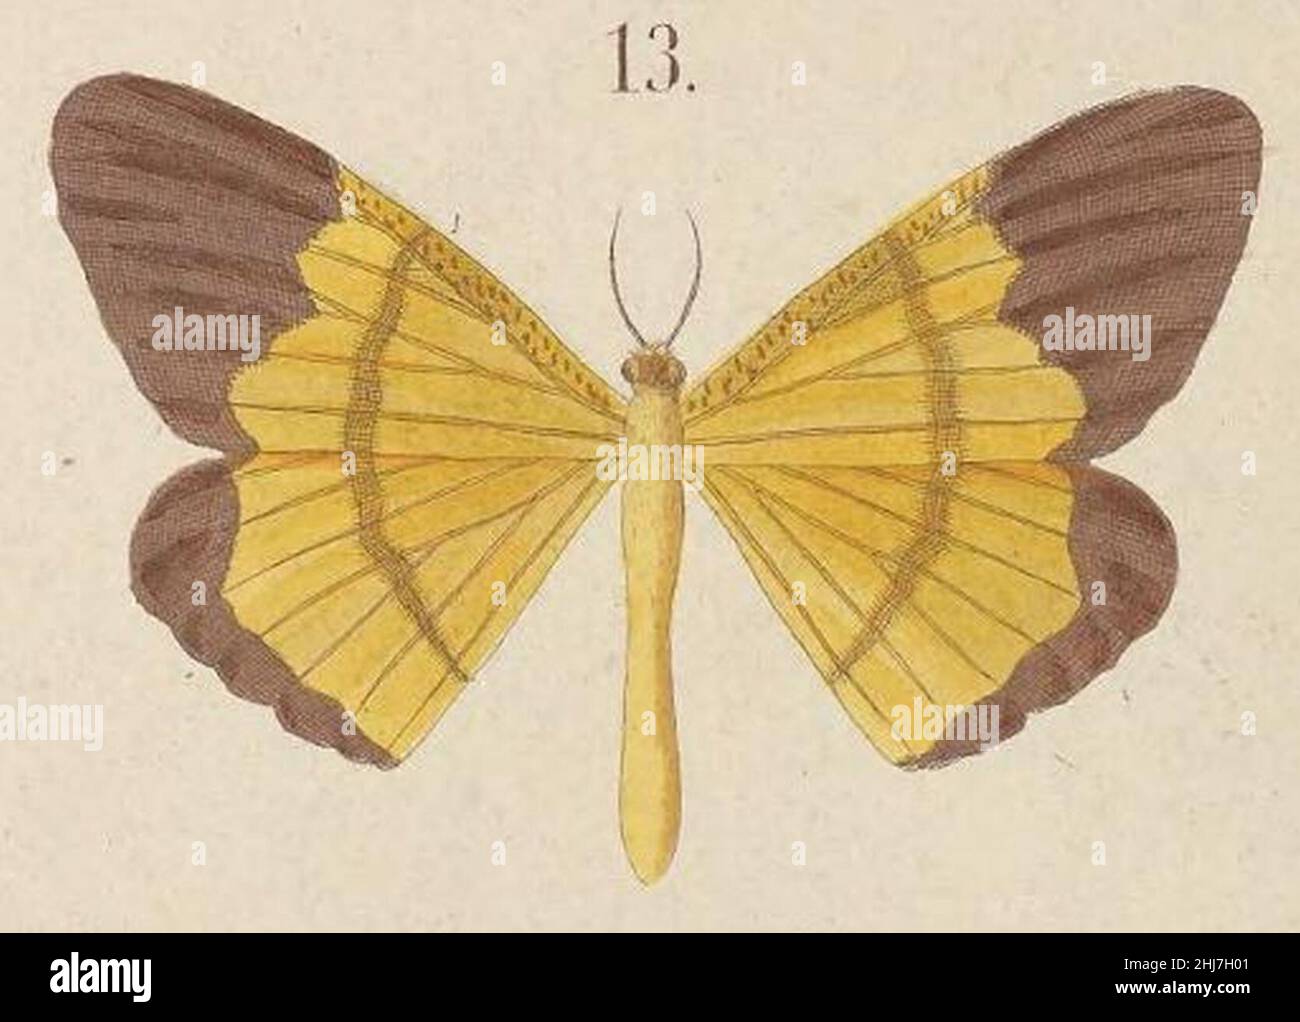 T7-13-Eumelea genuina Kirsch, 1877. Stock Photo